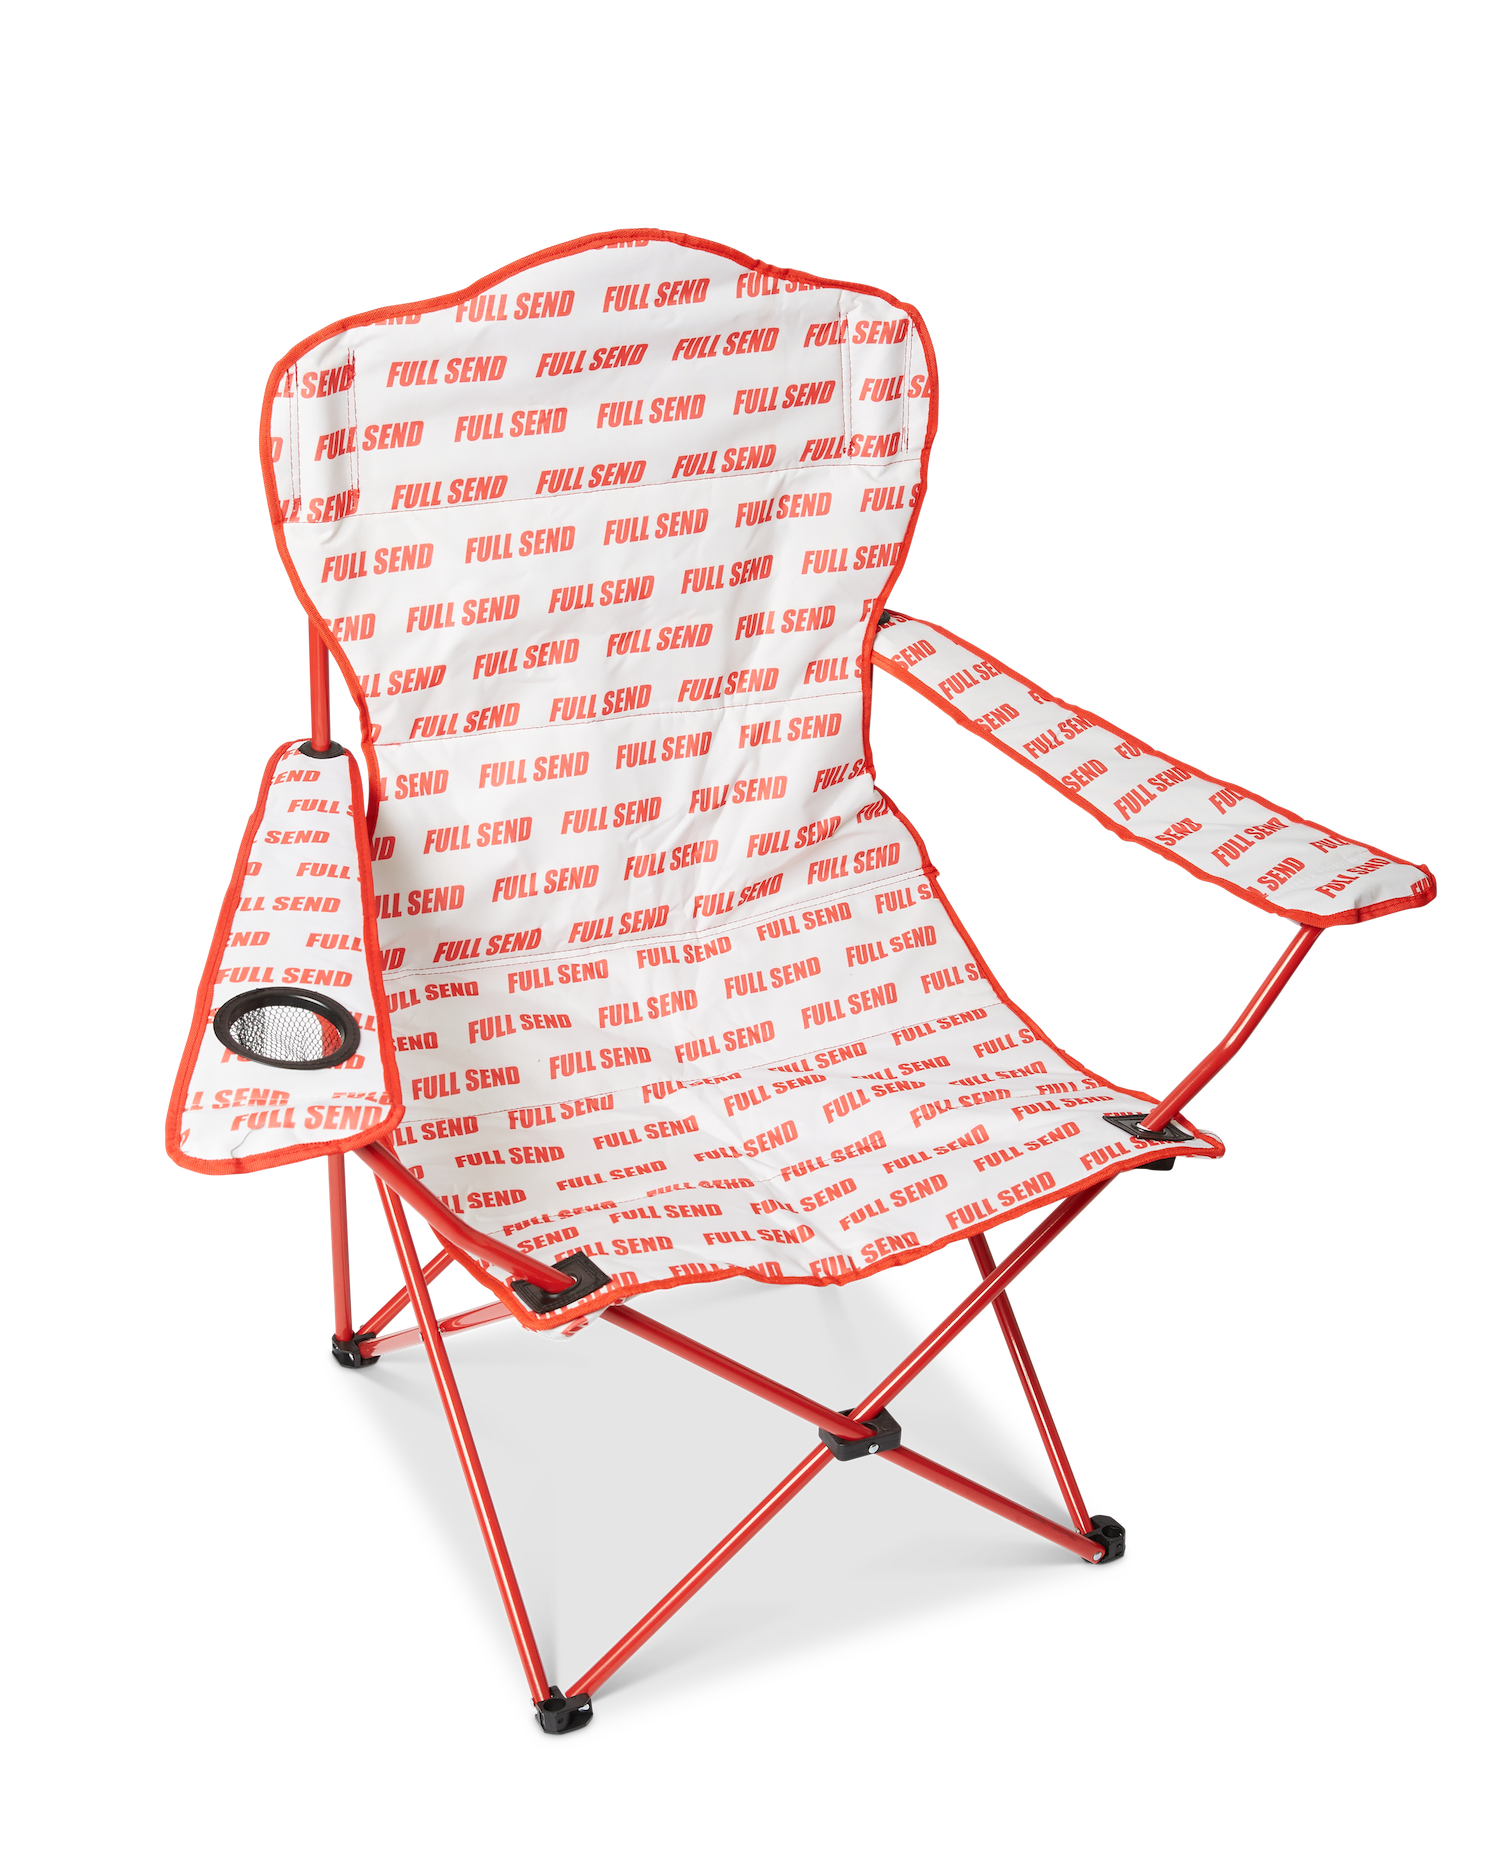 Full Send Lawn Chair – FULL SEND by NELK